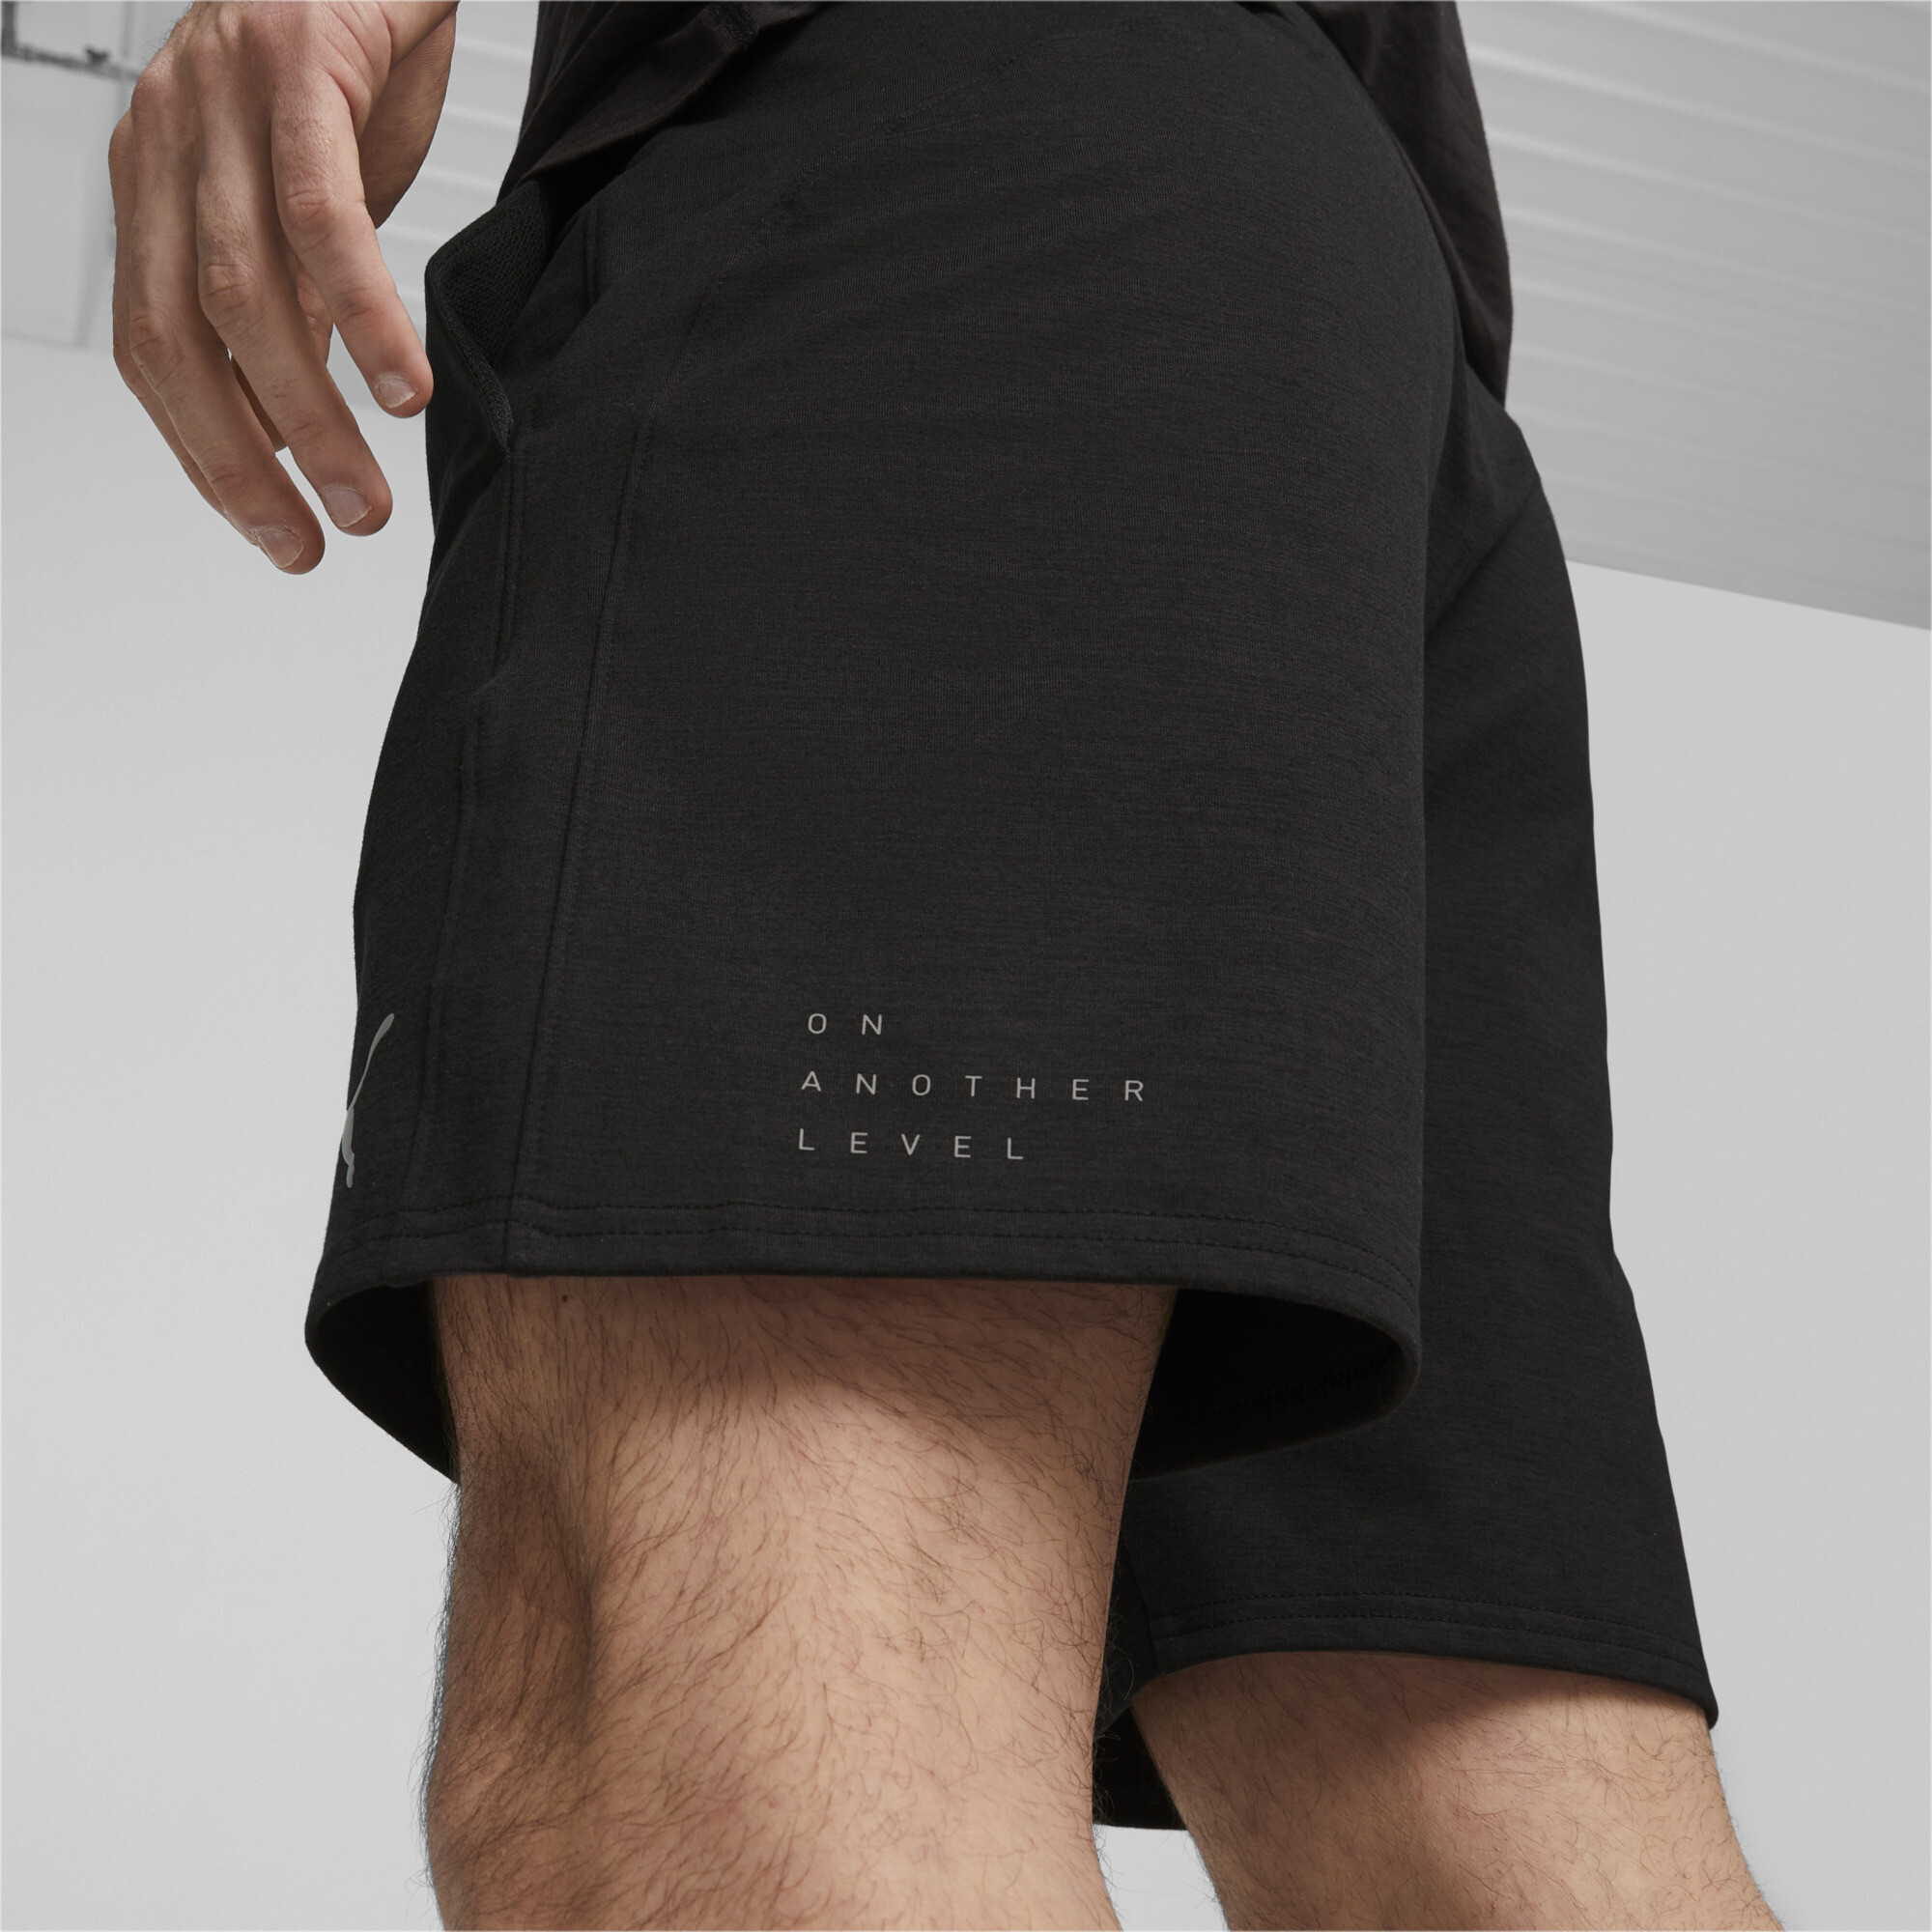 Men's Puma Train Cloudspun 7's Shorts, Black, Size M, Clothing